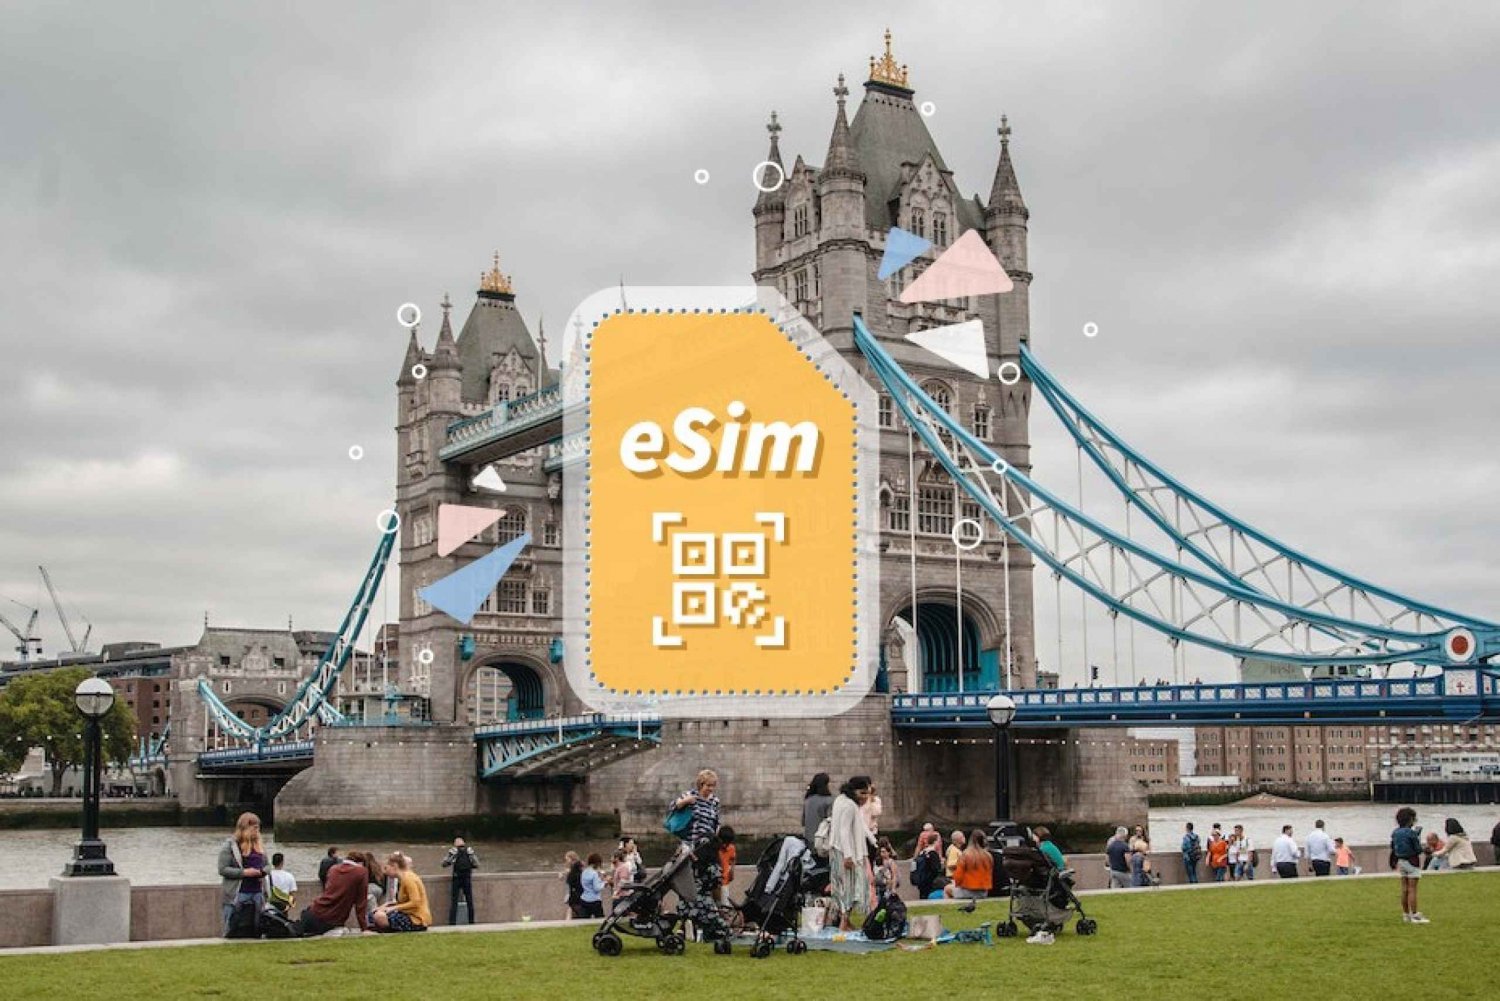 Storbritannien og Europa: 5G eSim mobildataplan